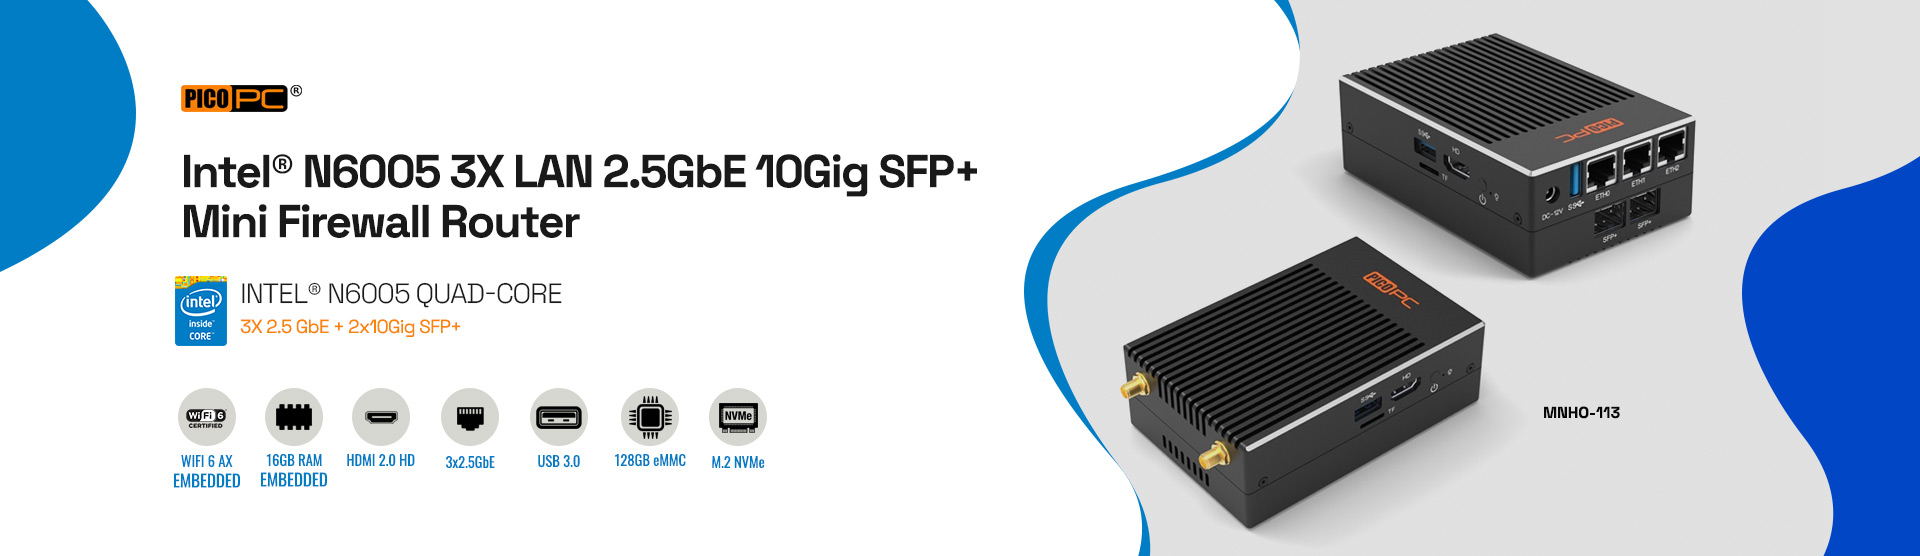 Intel N6005 3 LAN 2.5GbE 10Gig SPF+ Mini Firewall Router with 16GB RAM 128GB Storage WiFi6